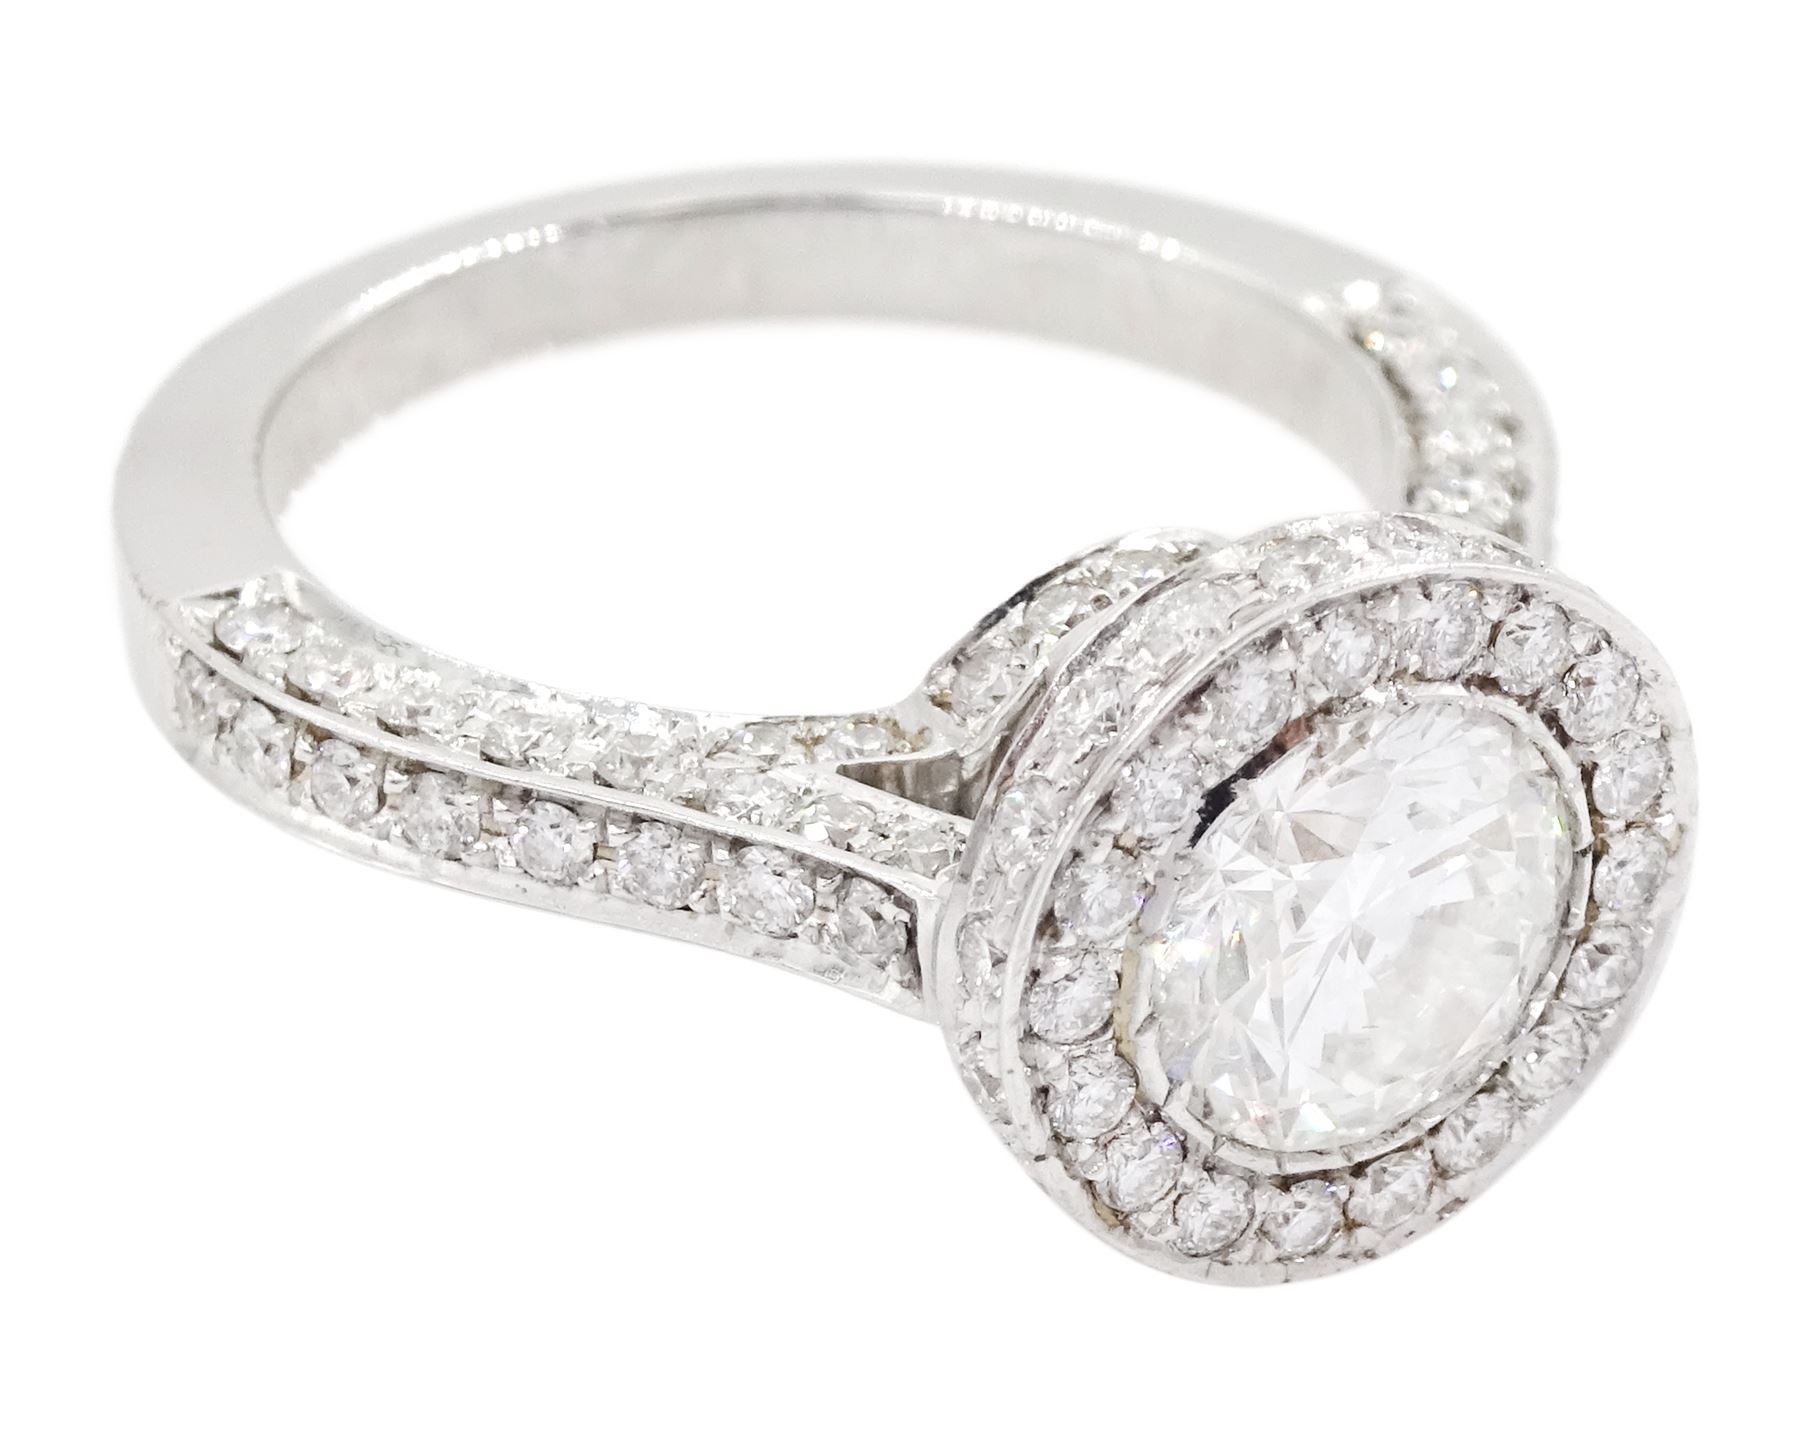 18ct white gold single stone round brilliant cut diamond ring - Image 3 of 4